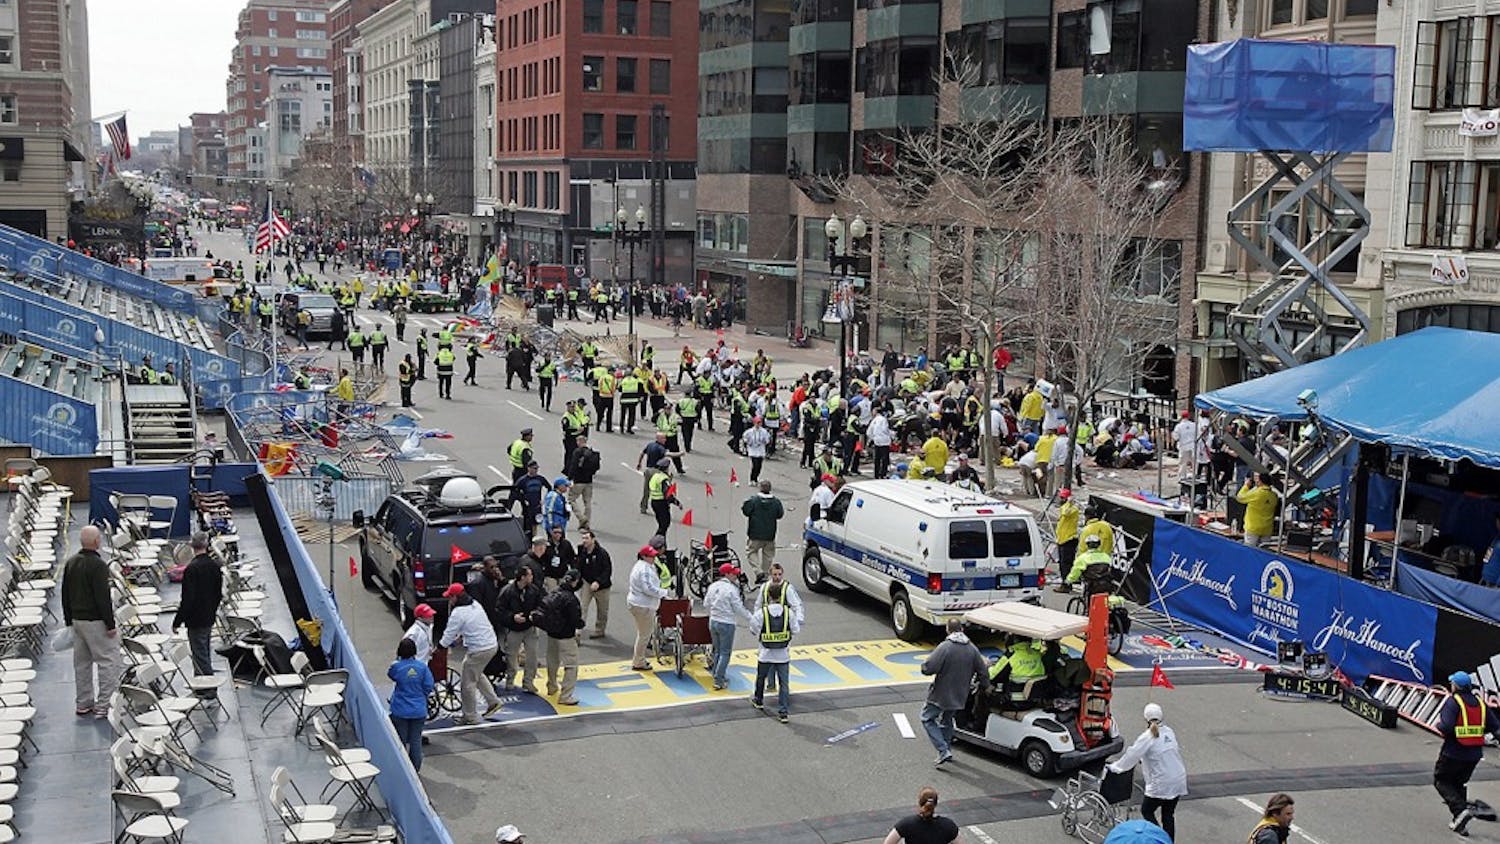 Emergency personnel assist the victims at the scene of a bomb blast during the Boston Marathon in Boston, Massachusetts, Monday, April 15, 2013. (Stuart Cahill/Boston Herald/MCT)